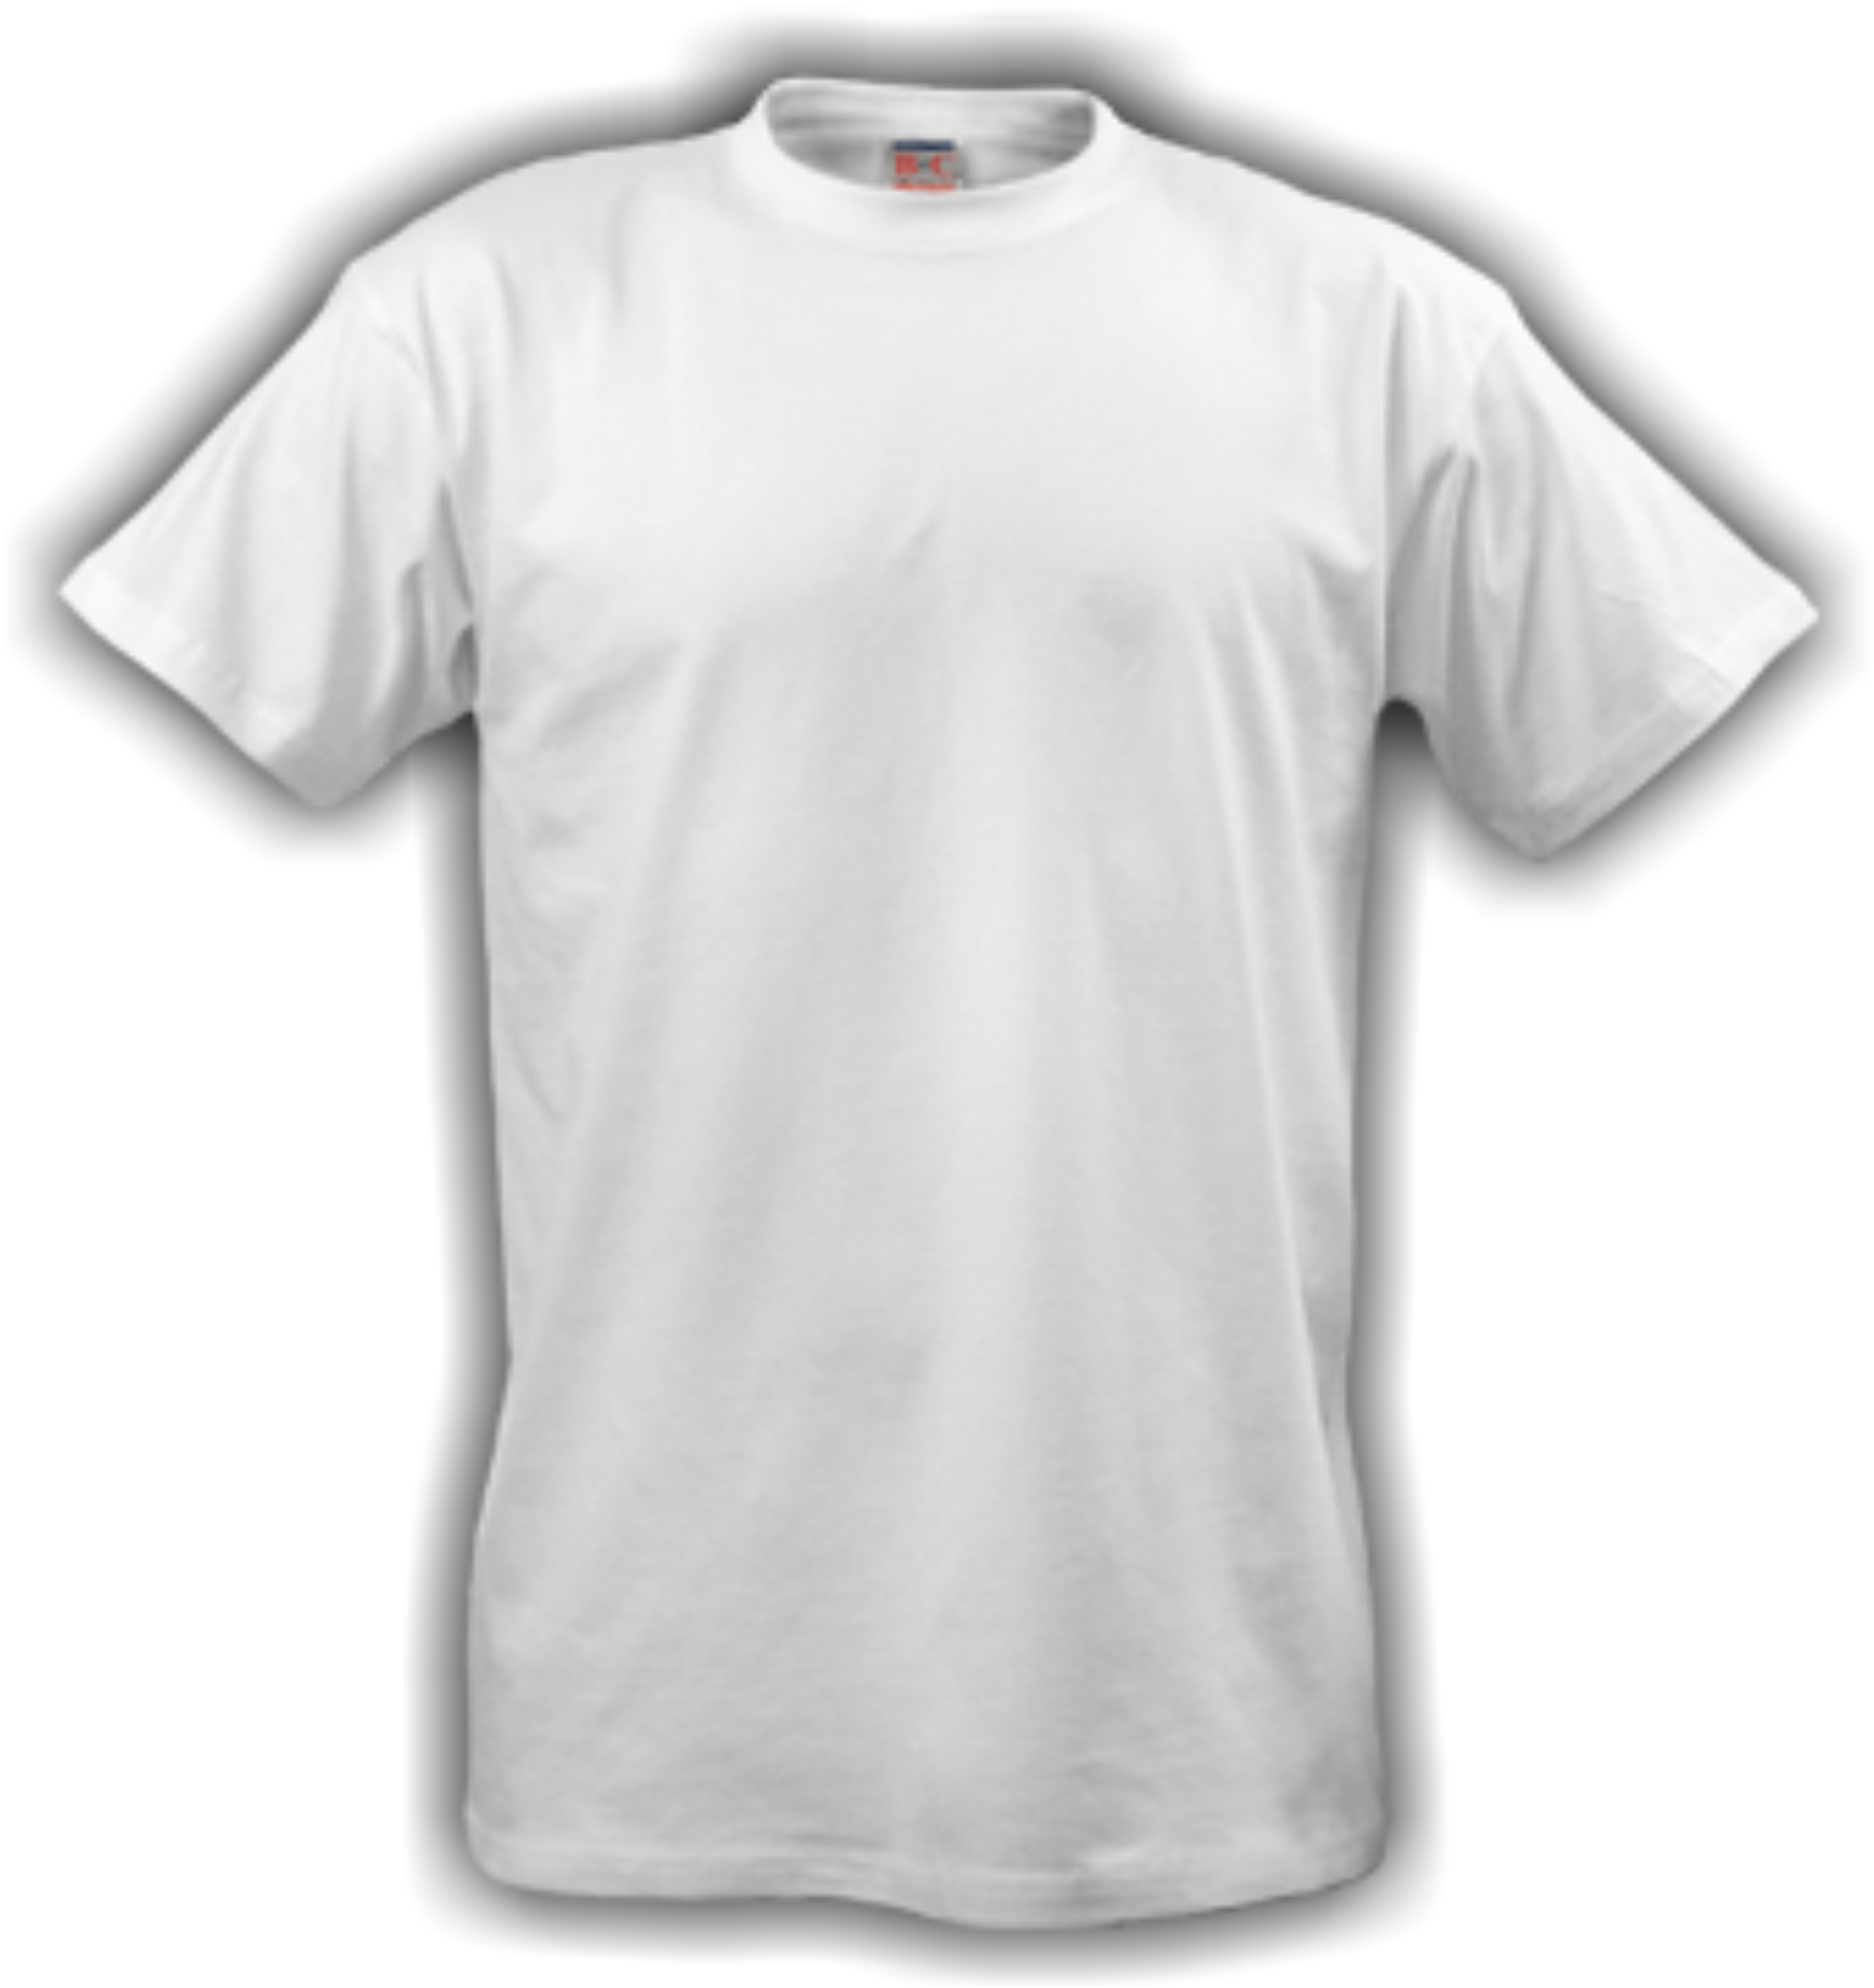 White Shirt Template